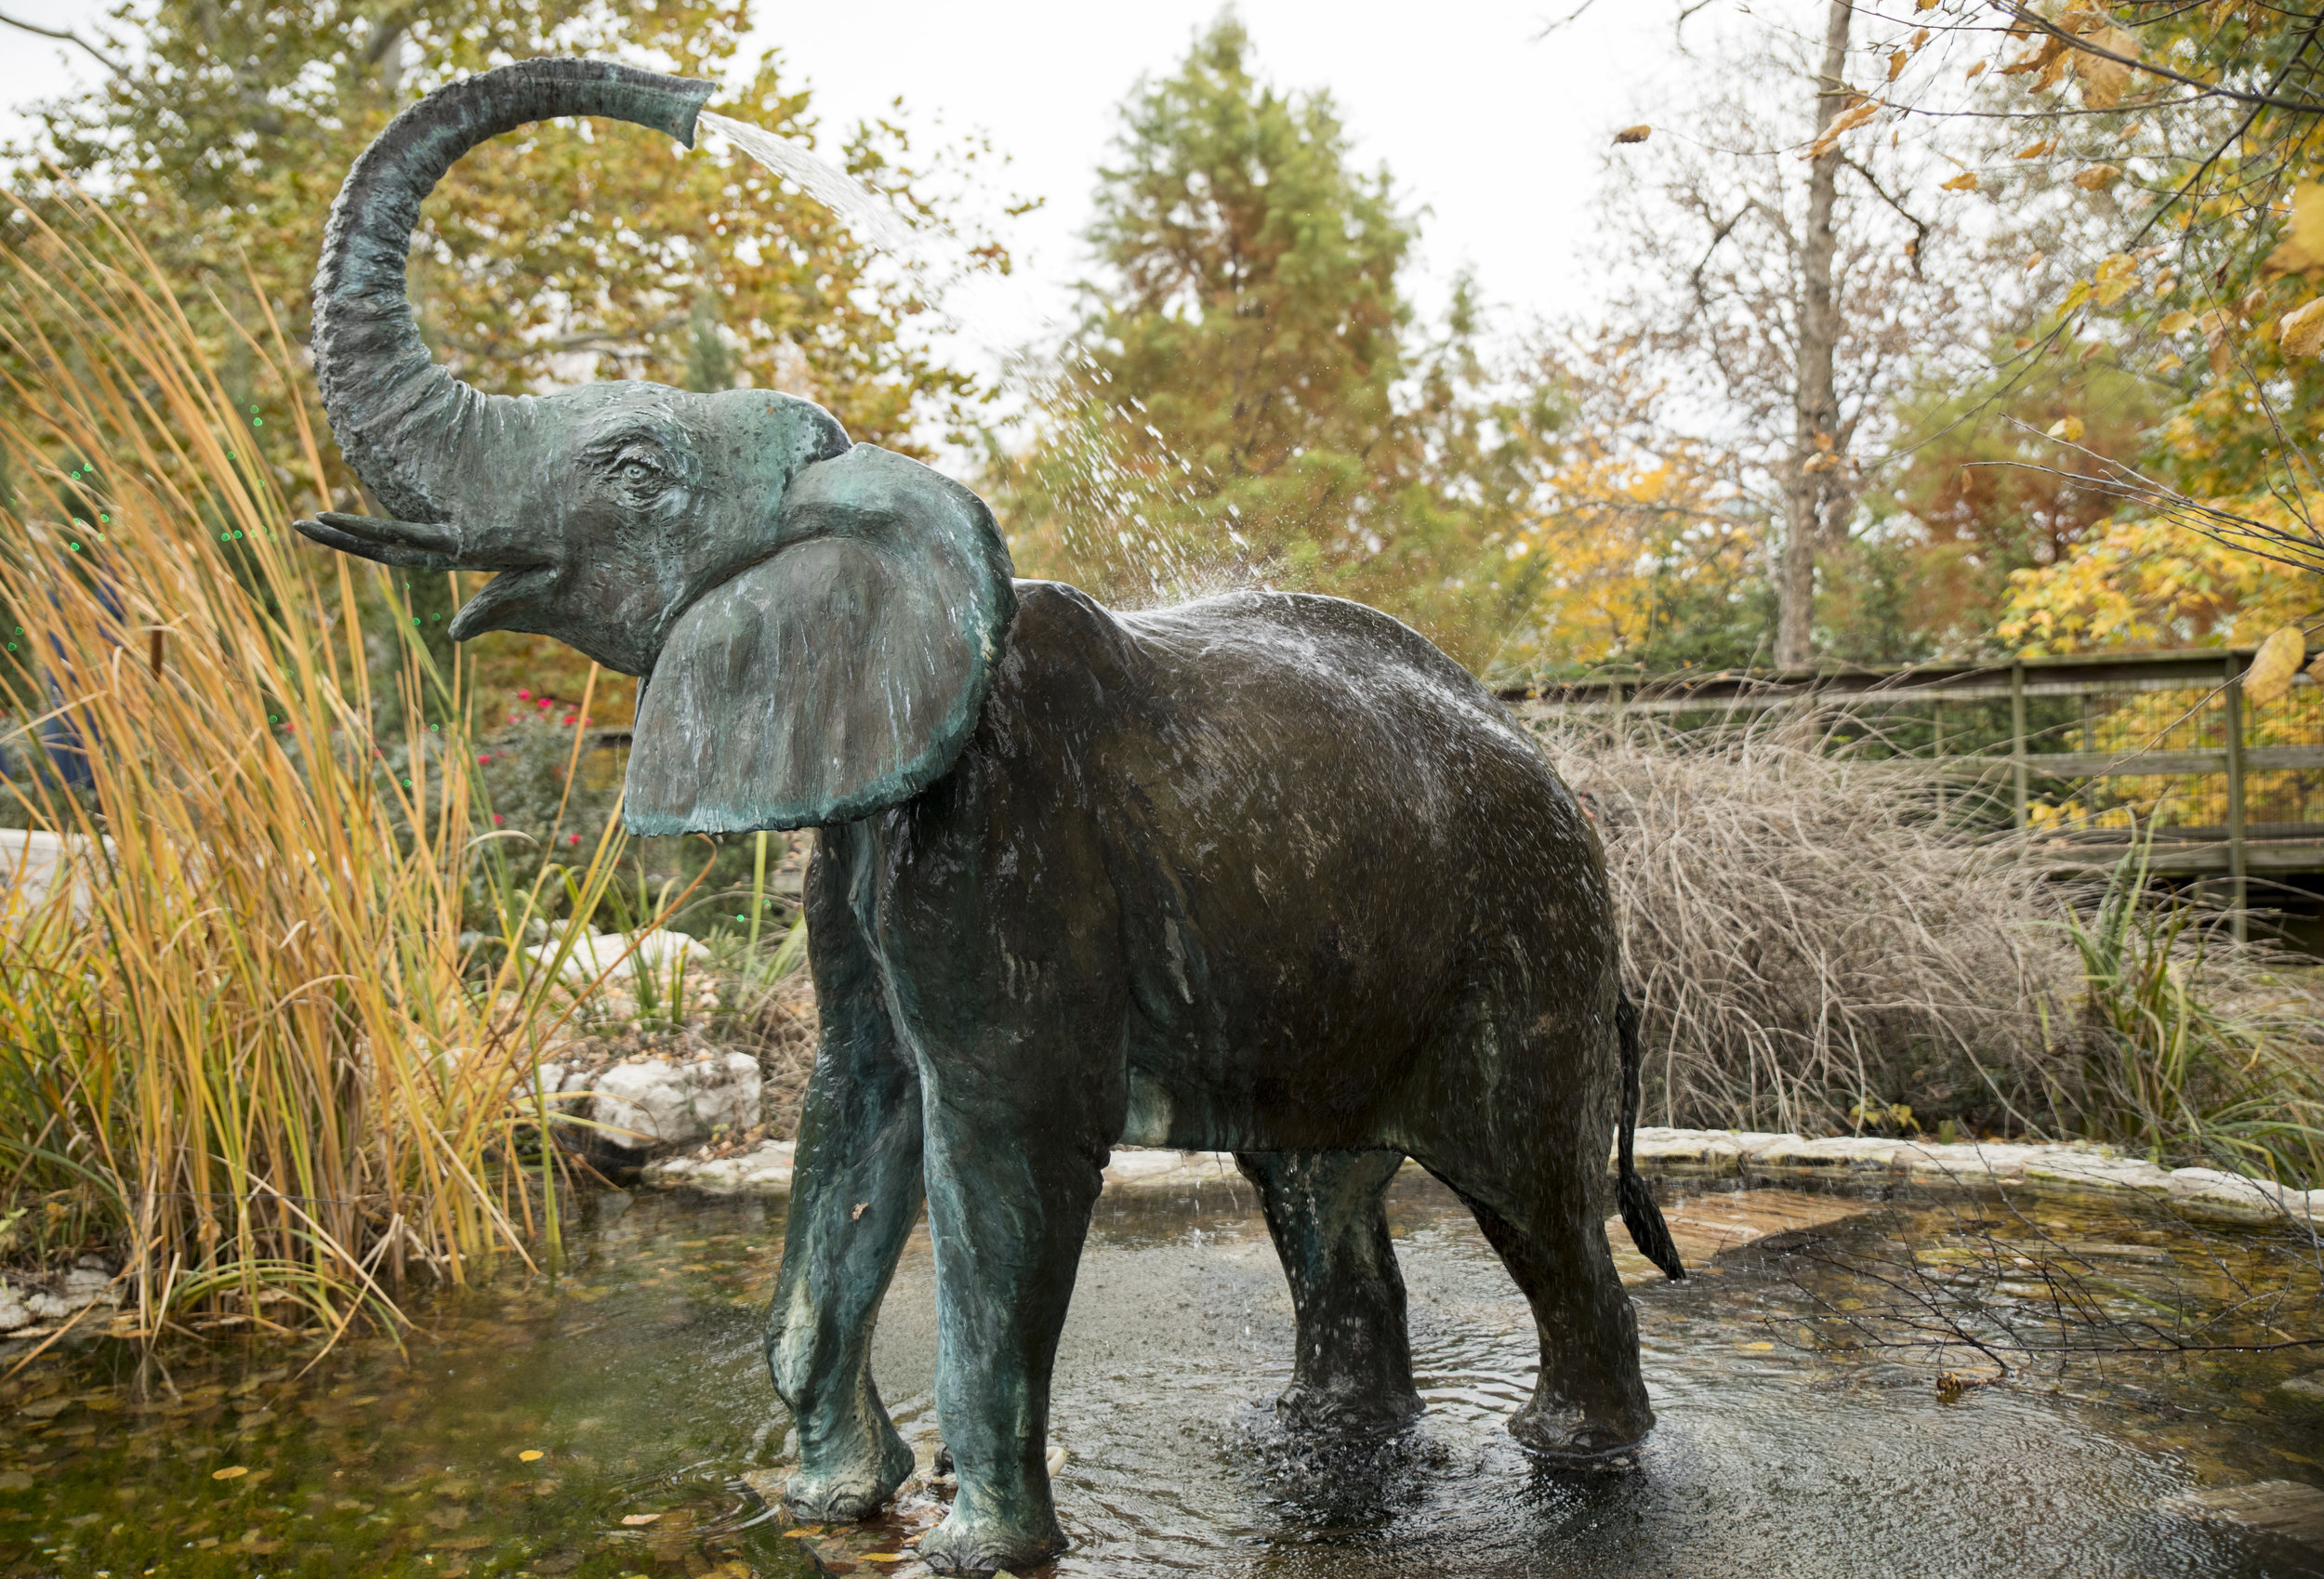 Elephant_Sculpture_Saint_Louis_Zoo.jpg